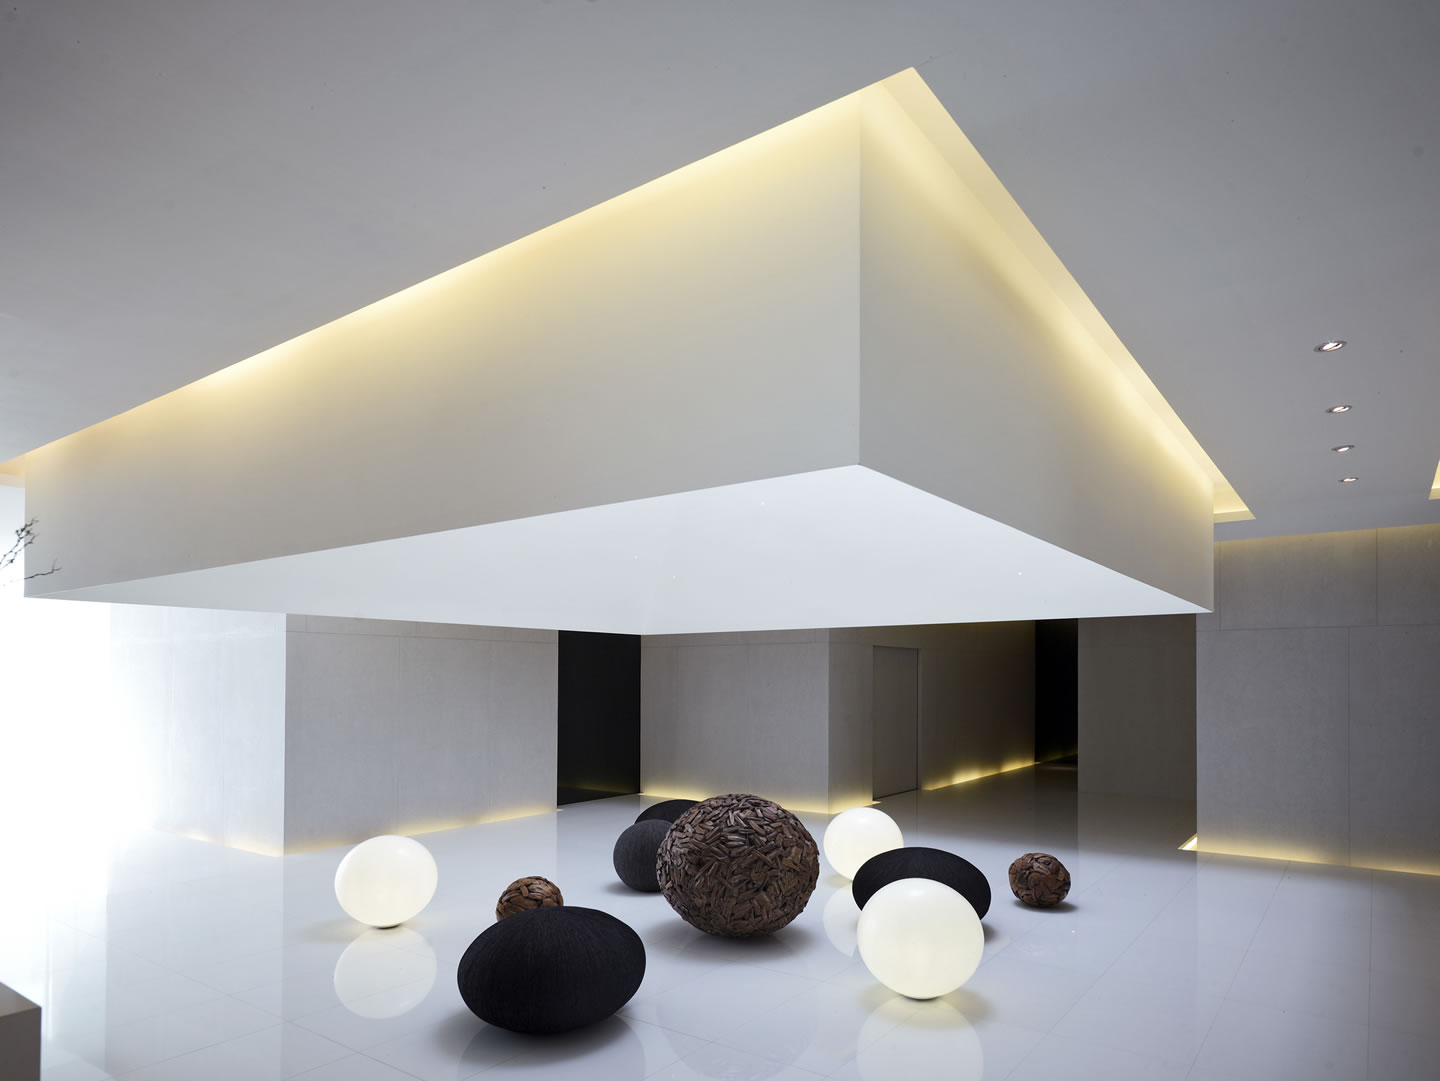 Lightbox - Hsuyuan Kuo Architect & Associates